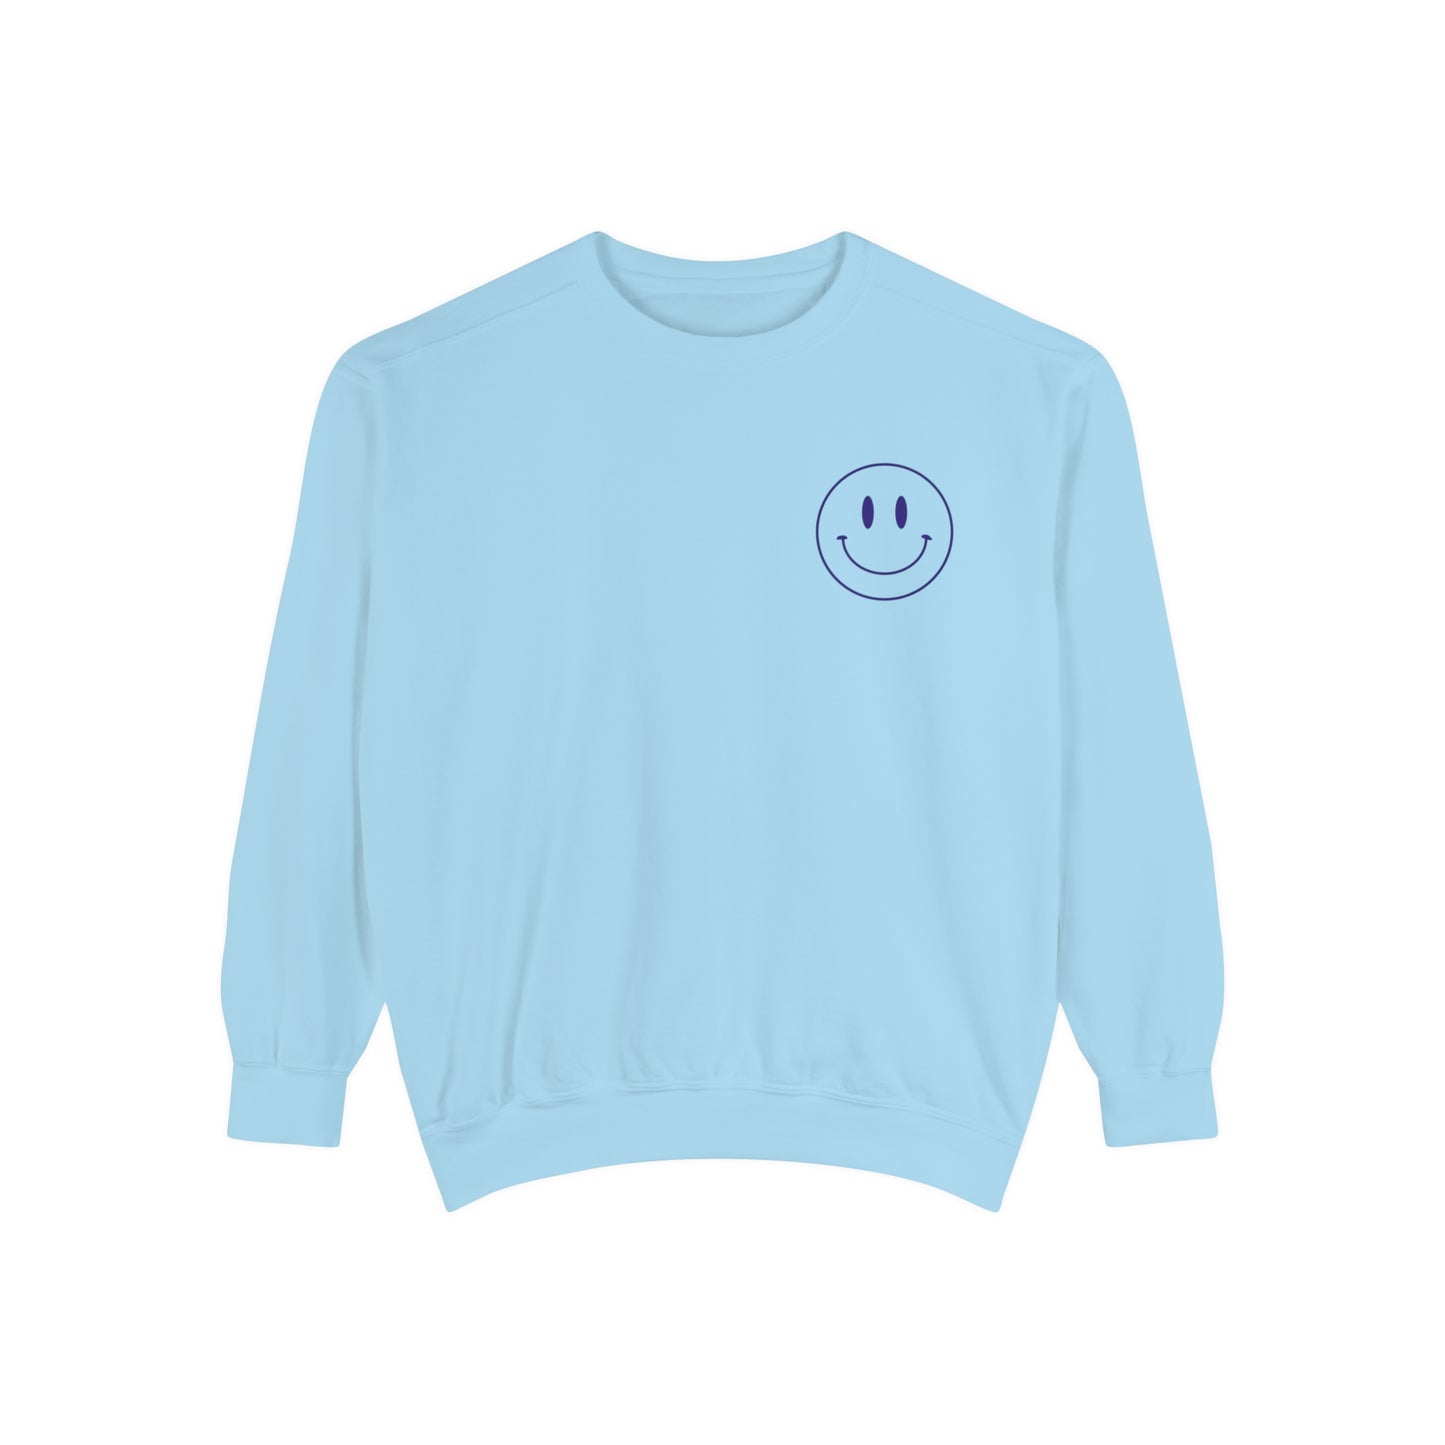 OT Life Smiley Comfort Colors Sweatshirt